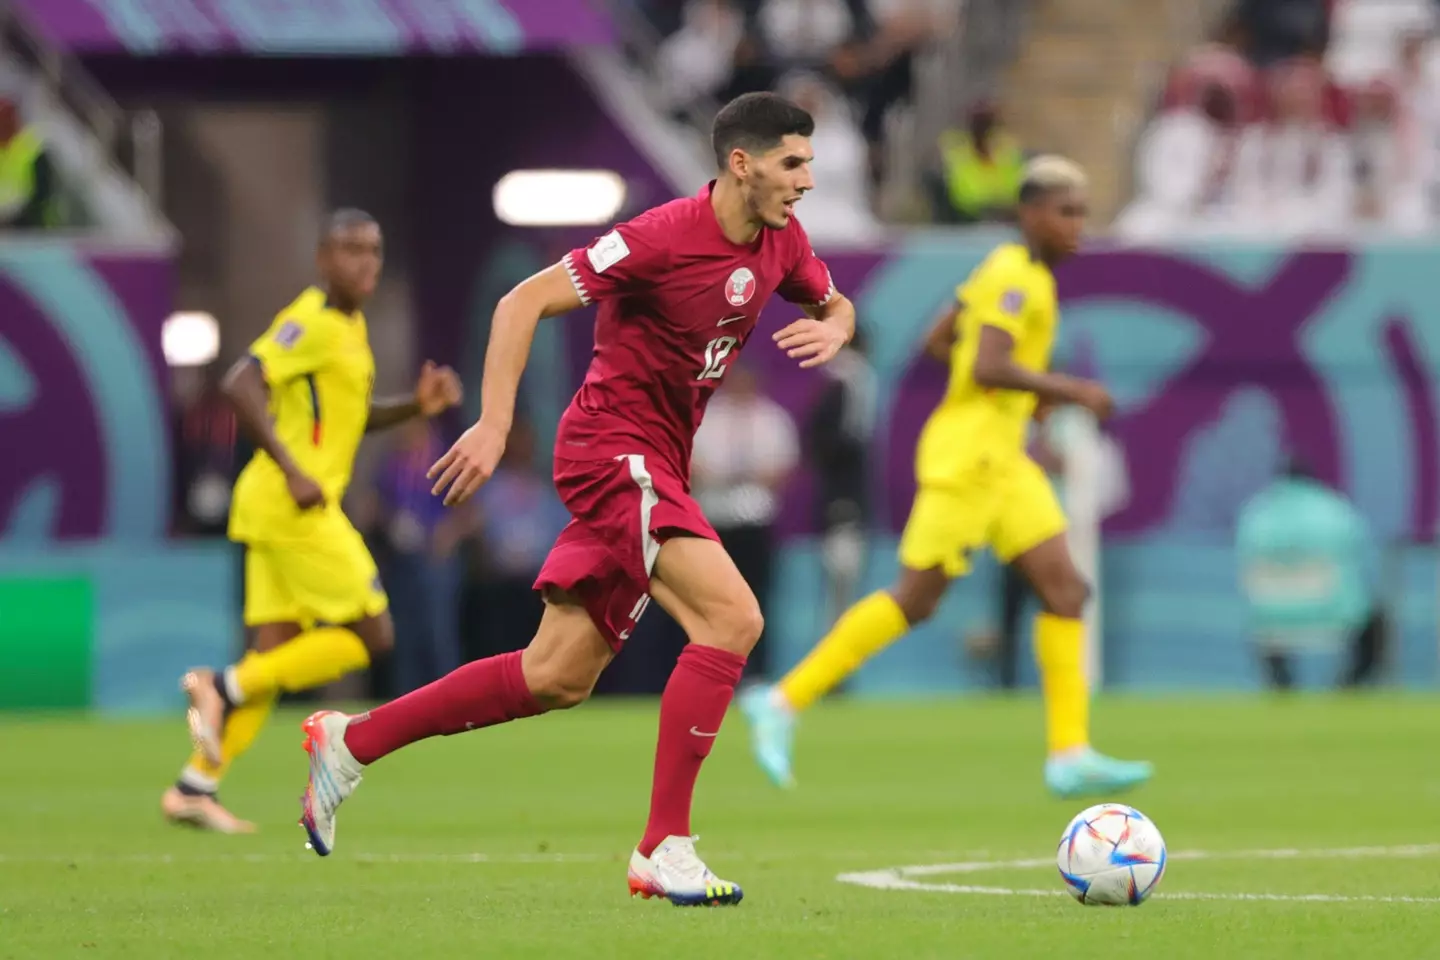 Karim Boudiaf of Qatar dribbles the ball during the FIFA World Cup Qatar 2022 Group A match between Qatar and Ecuador.